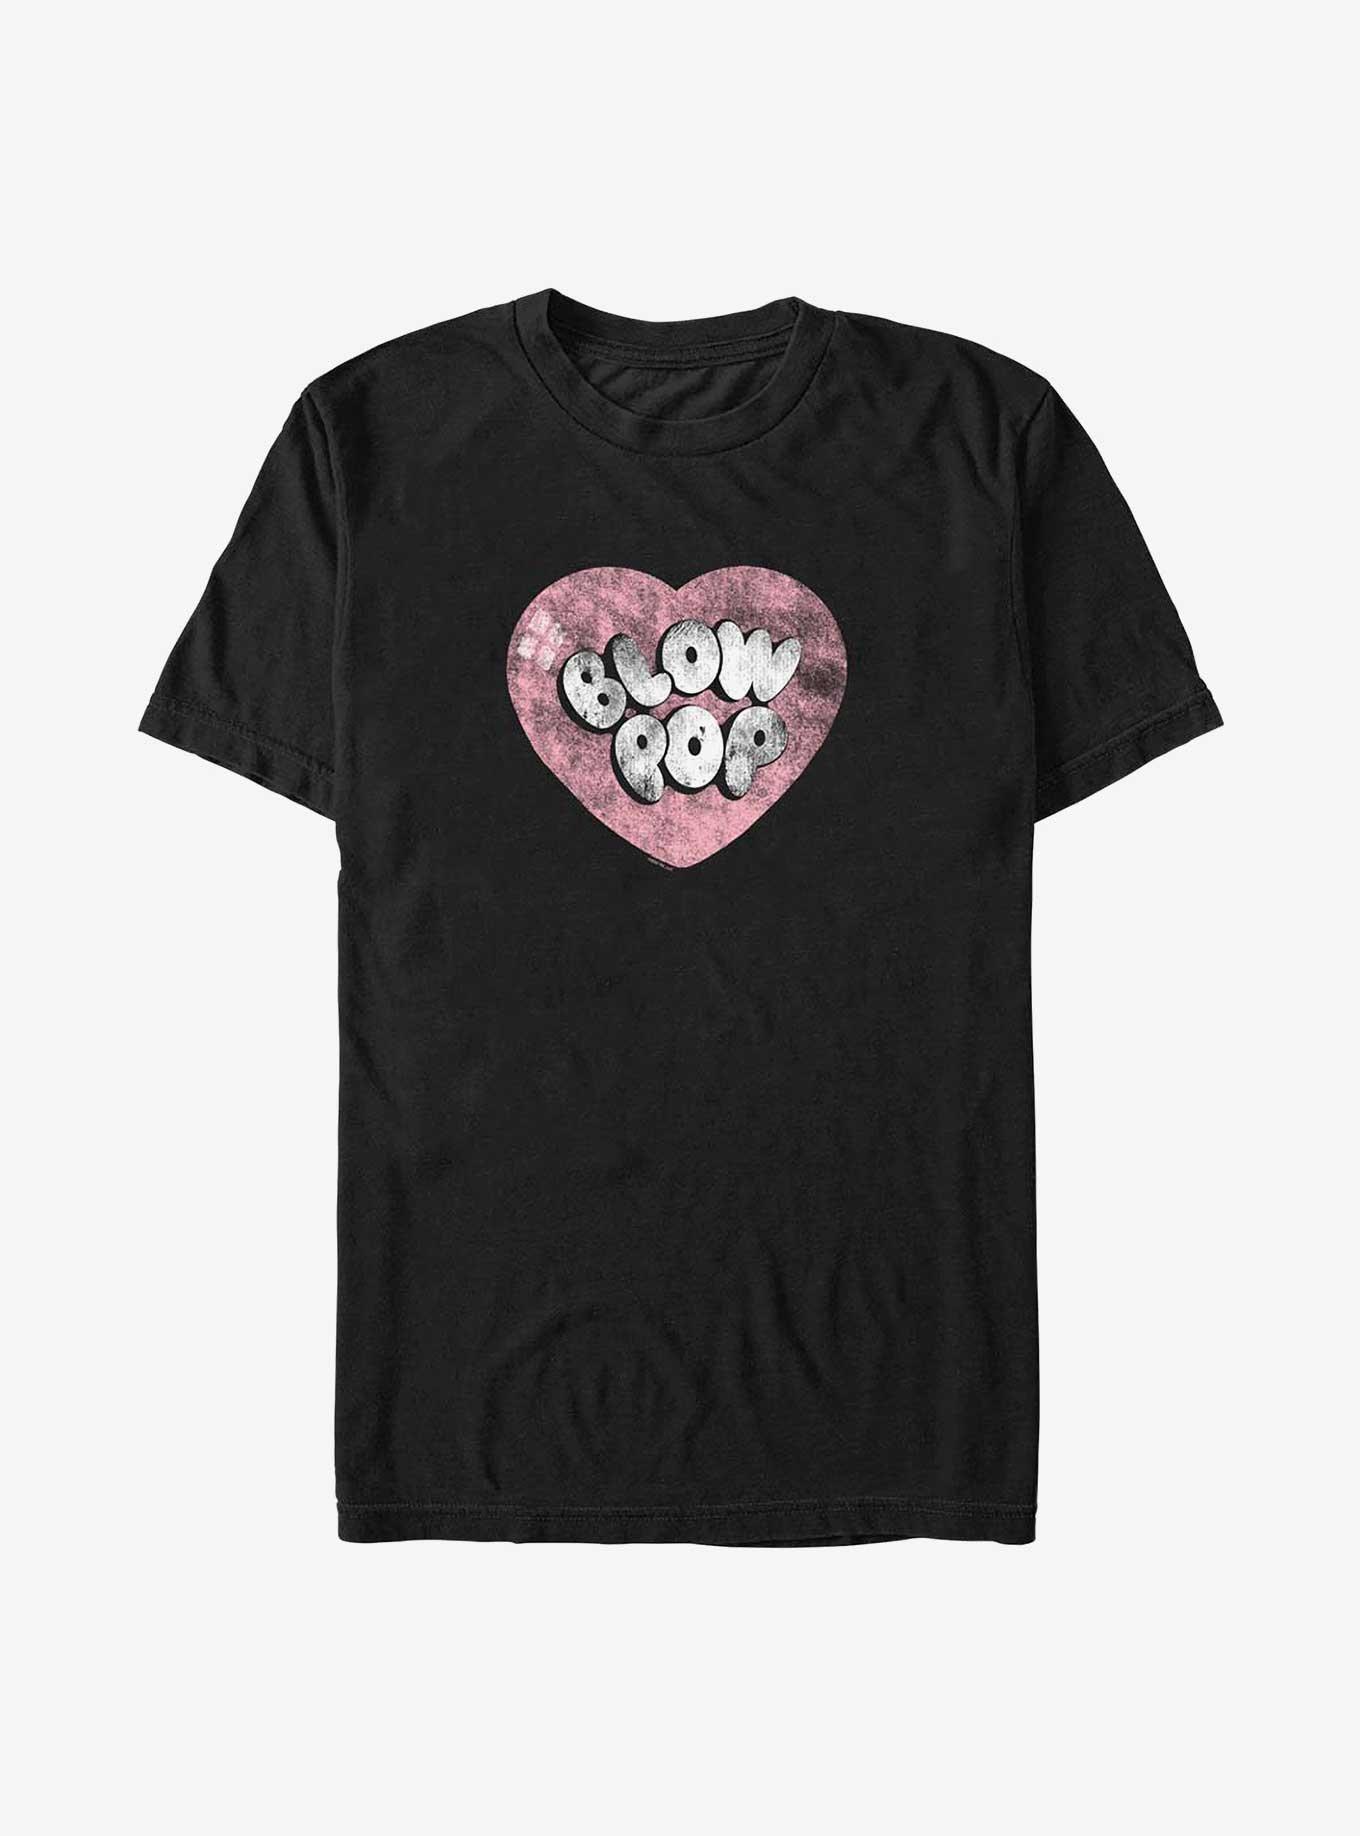 Tootsie Roll Blow Pop Heart T-Shirt, BLACK, hi-res